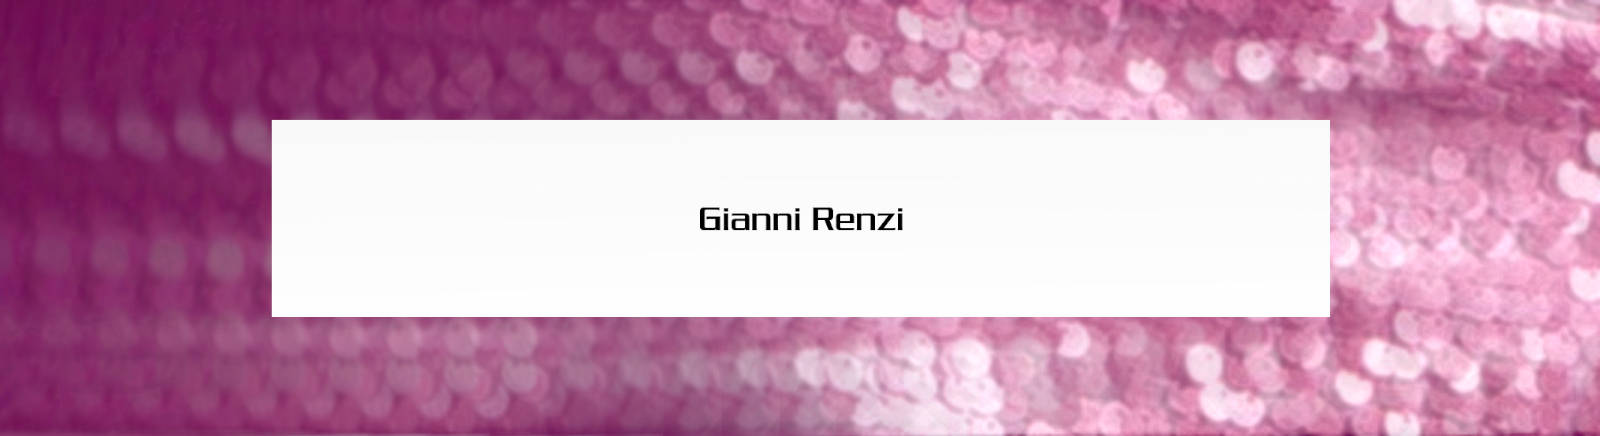 Prange: Gianni Renzi Sneaker für Damen kaufen online shoppen